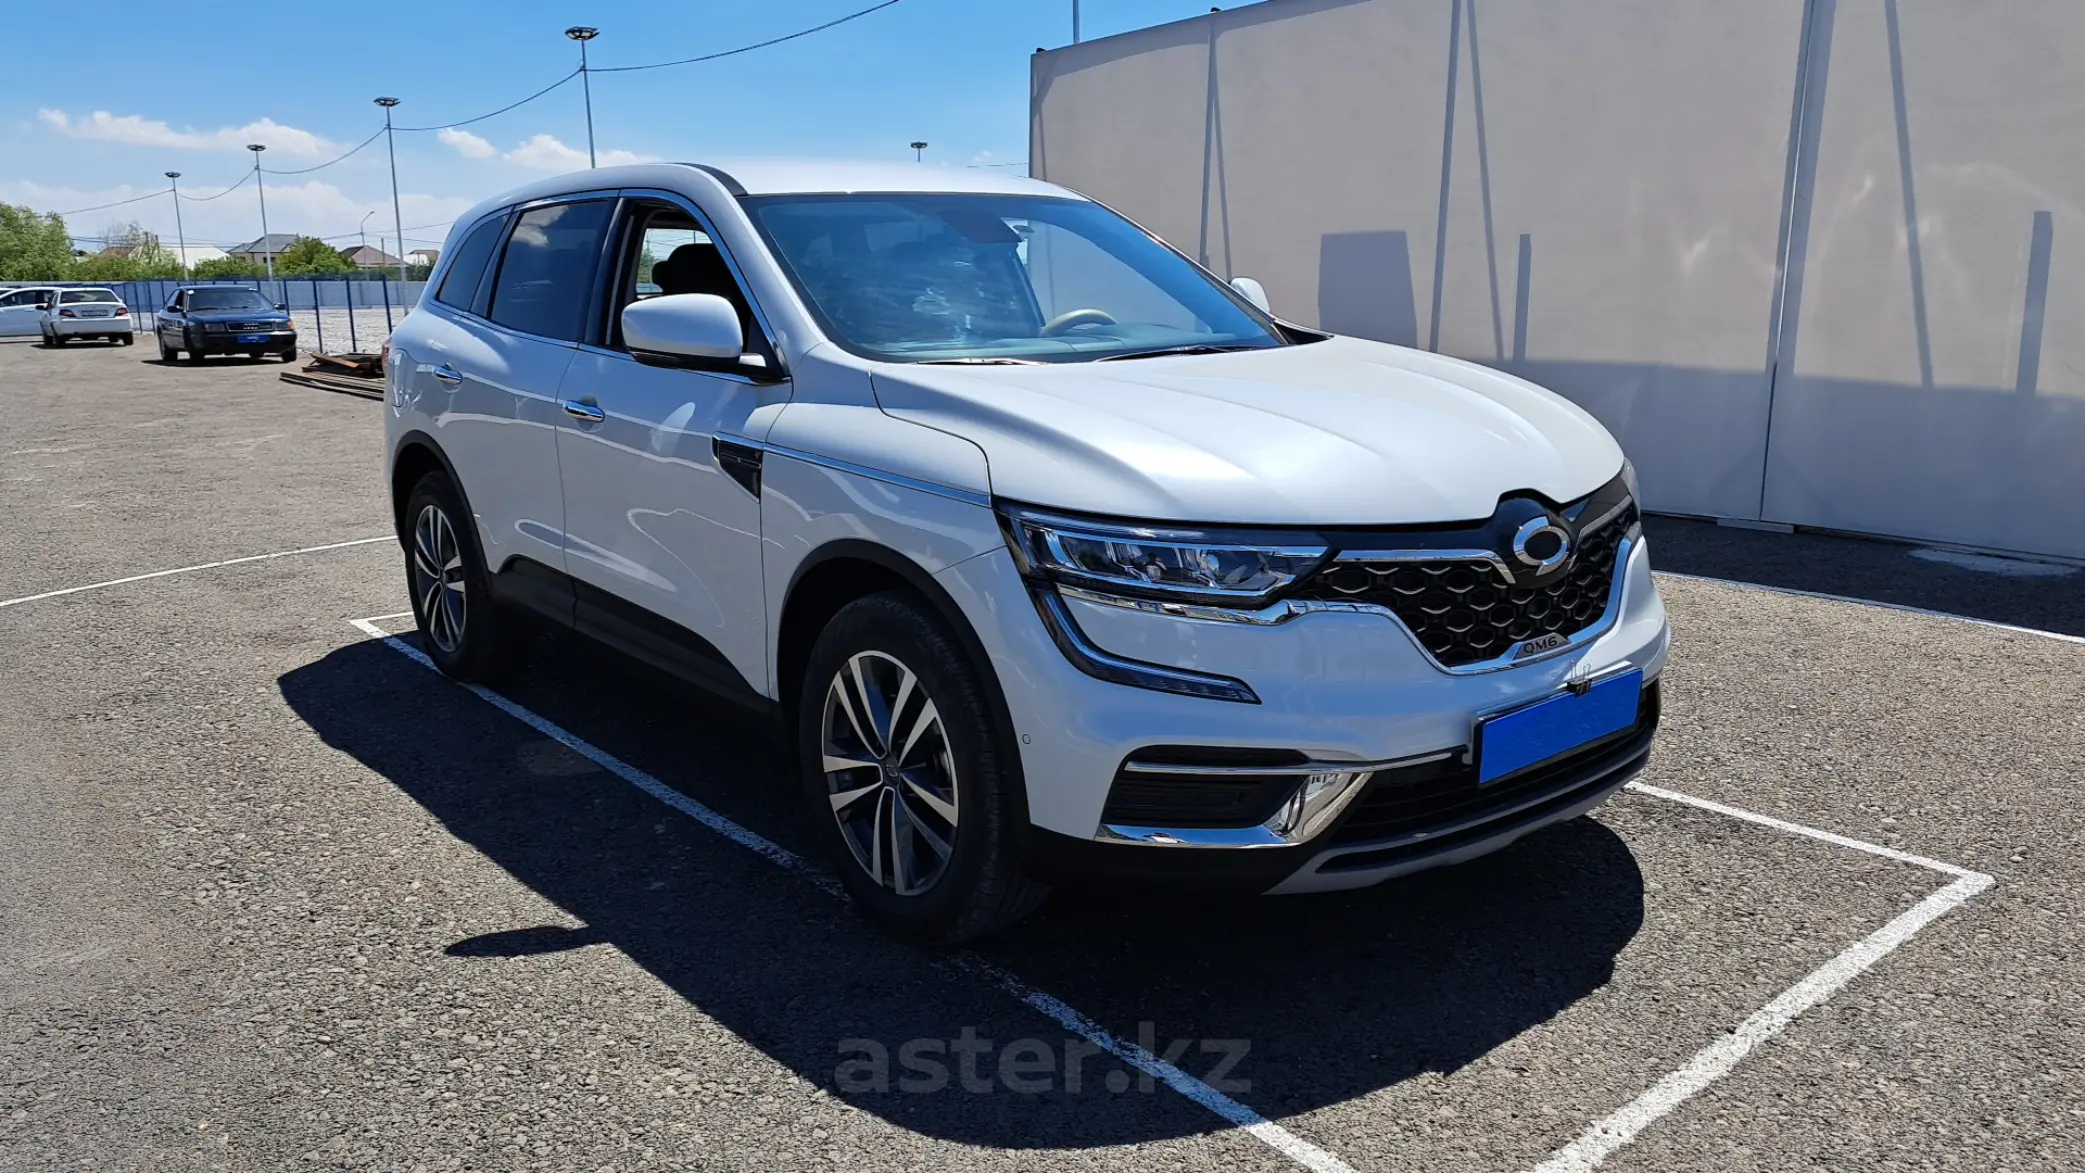 Renault qm6